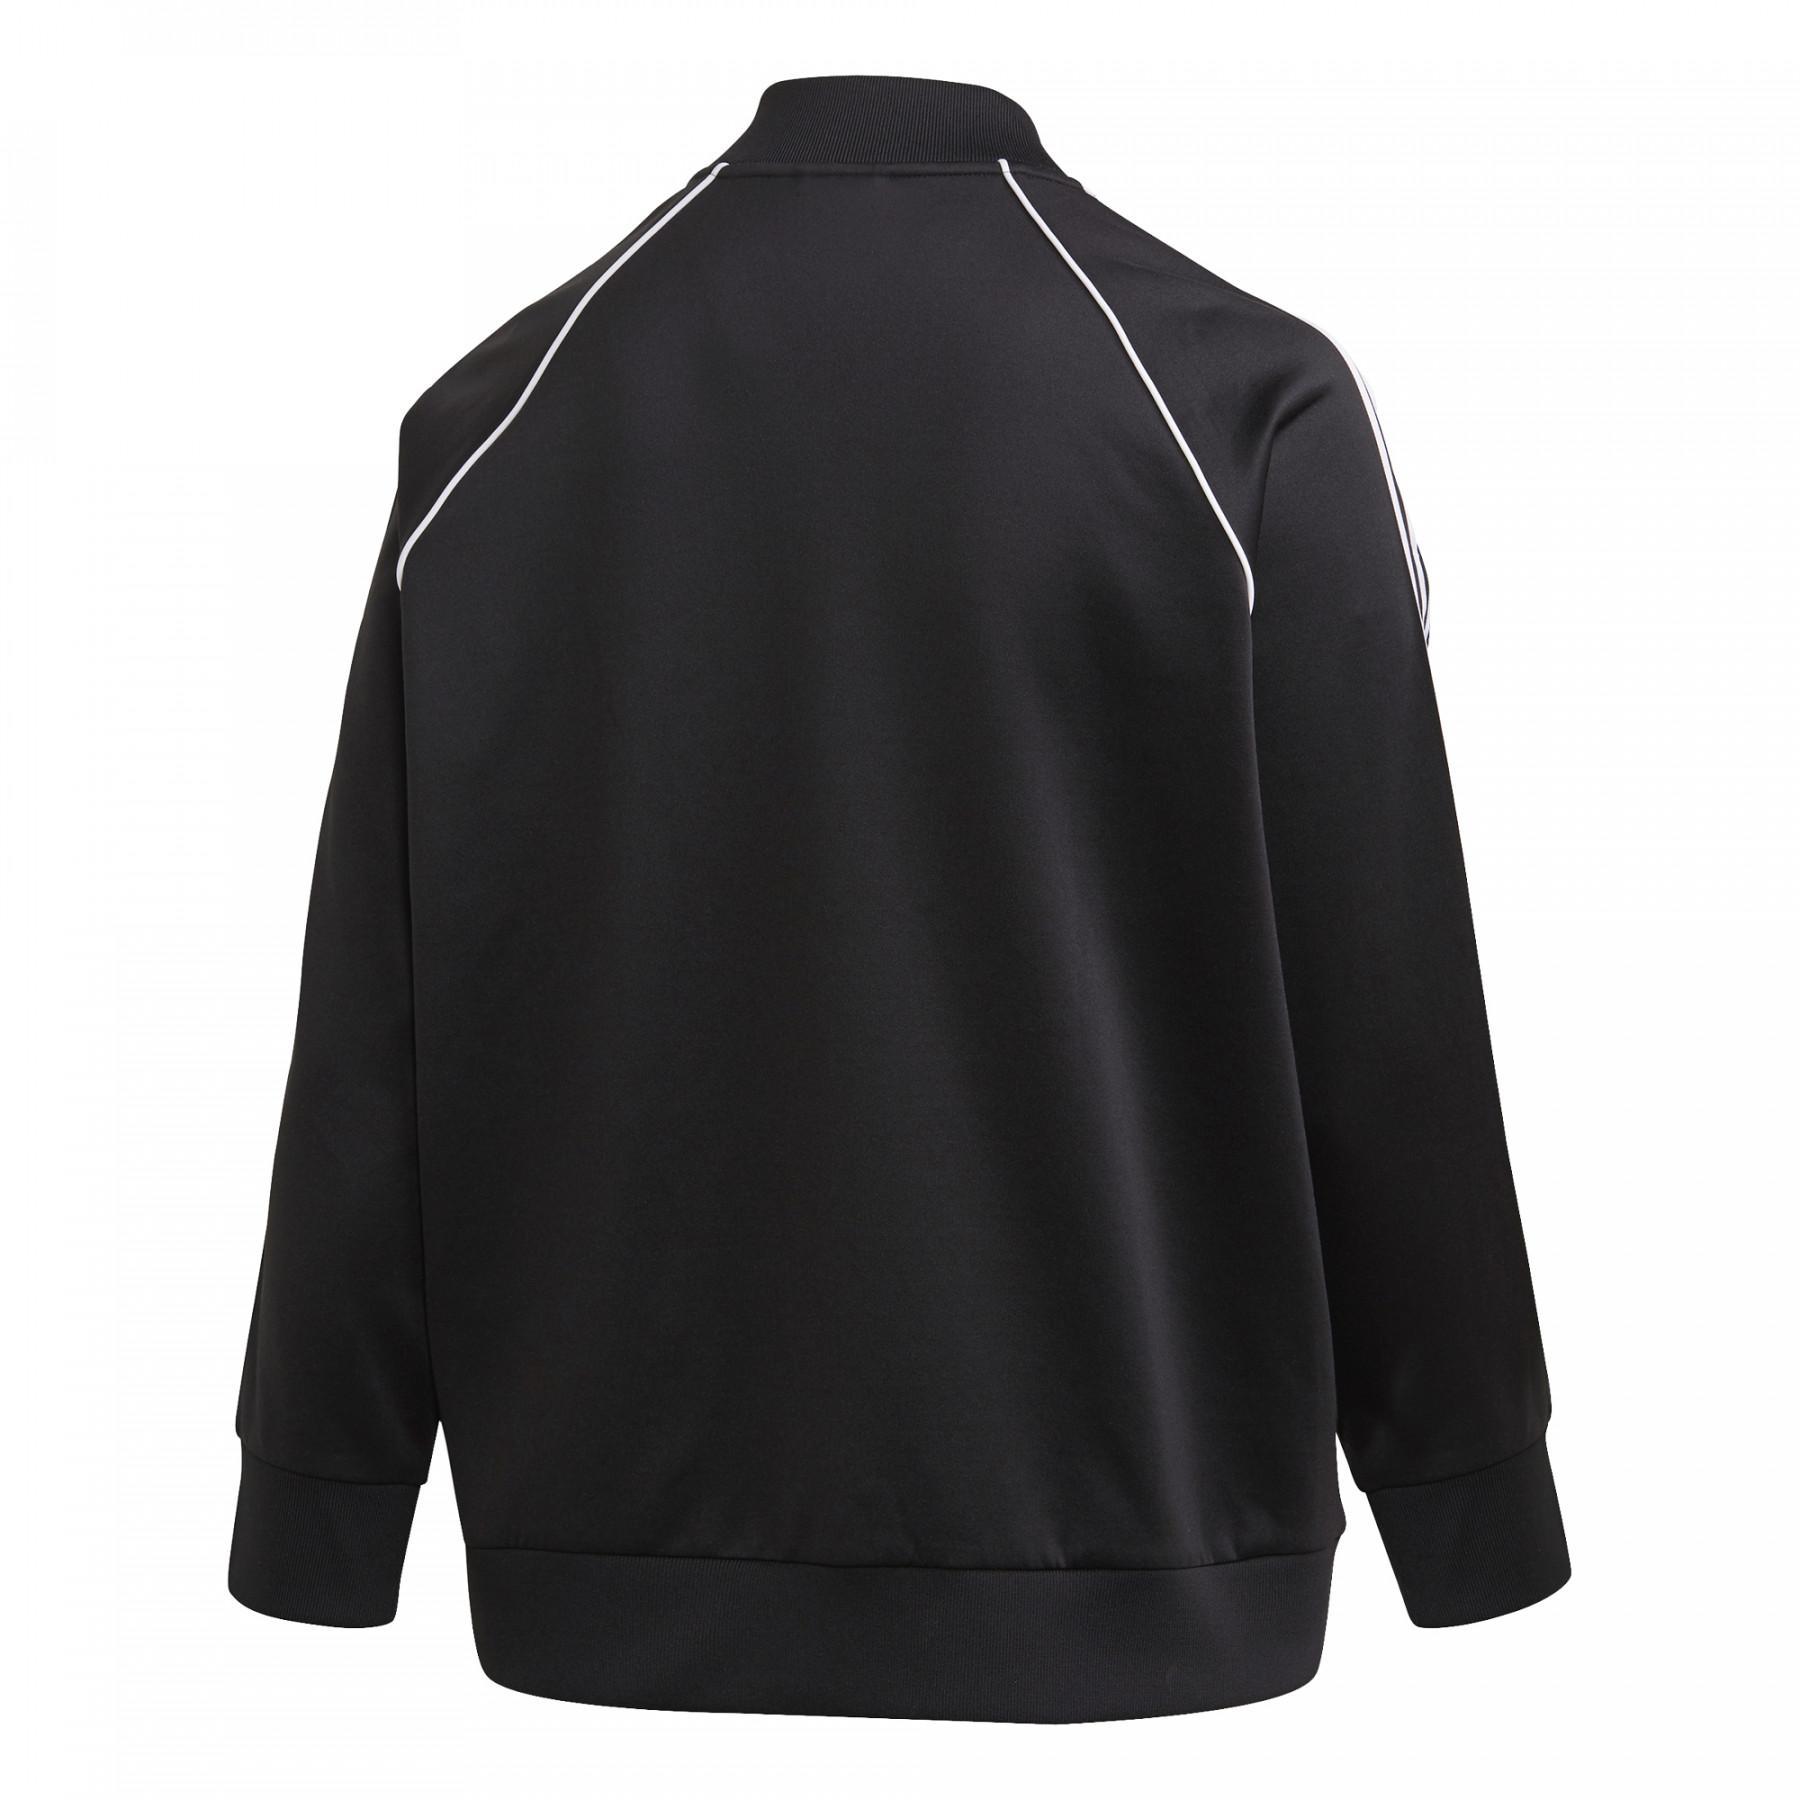 Women's sweat jacket adidas Originals Primeblue SST Track- large sizes